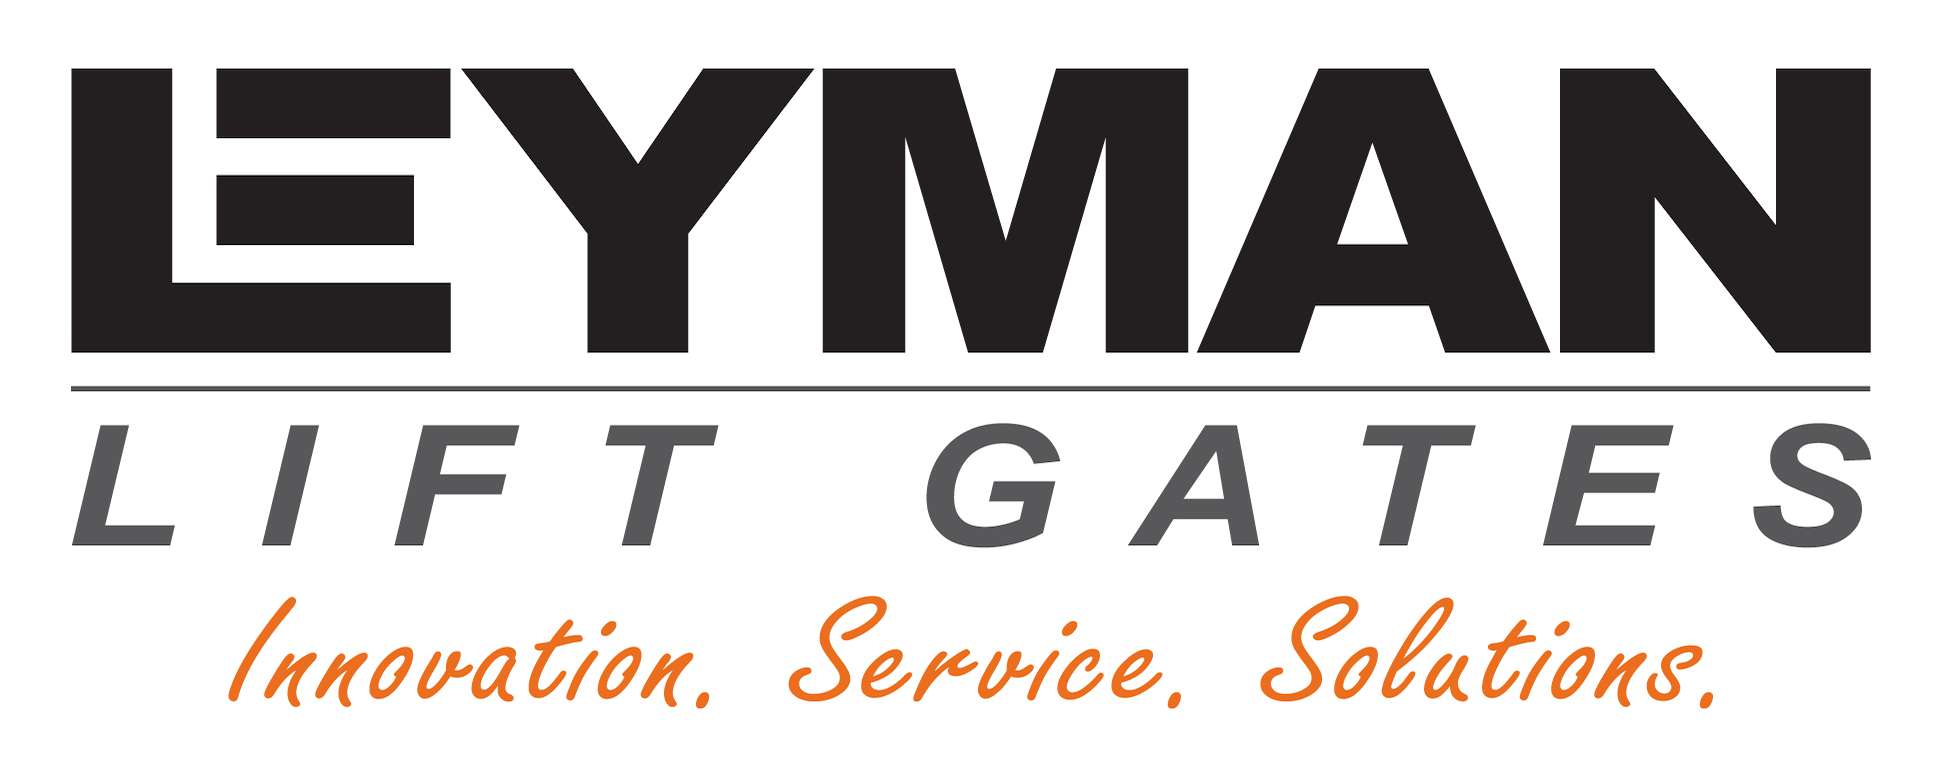 Leyman Manufacturing Corp.